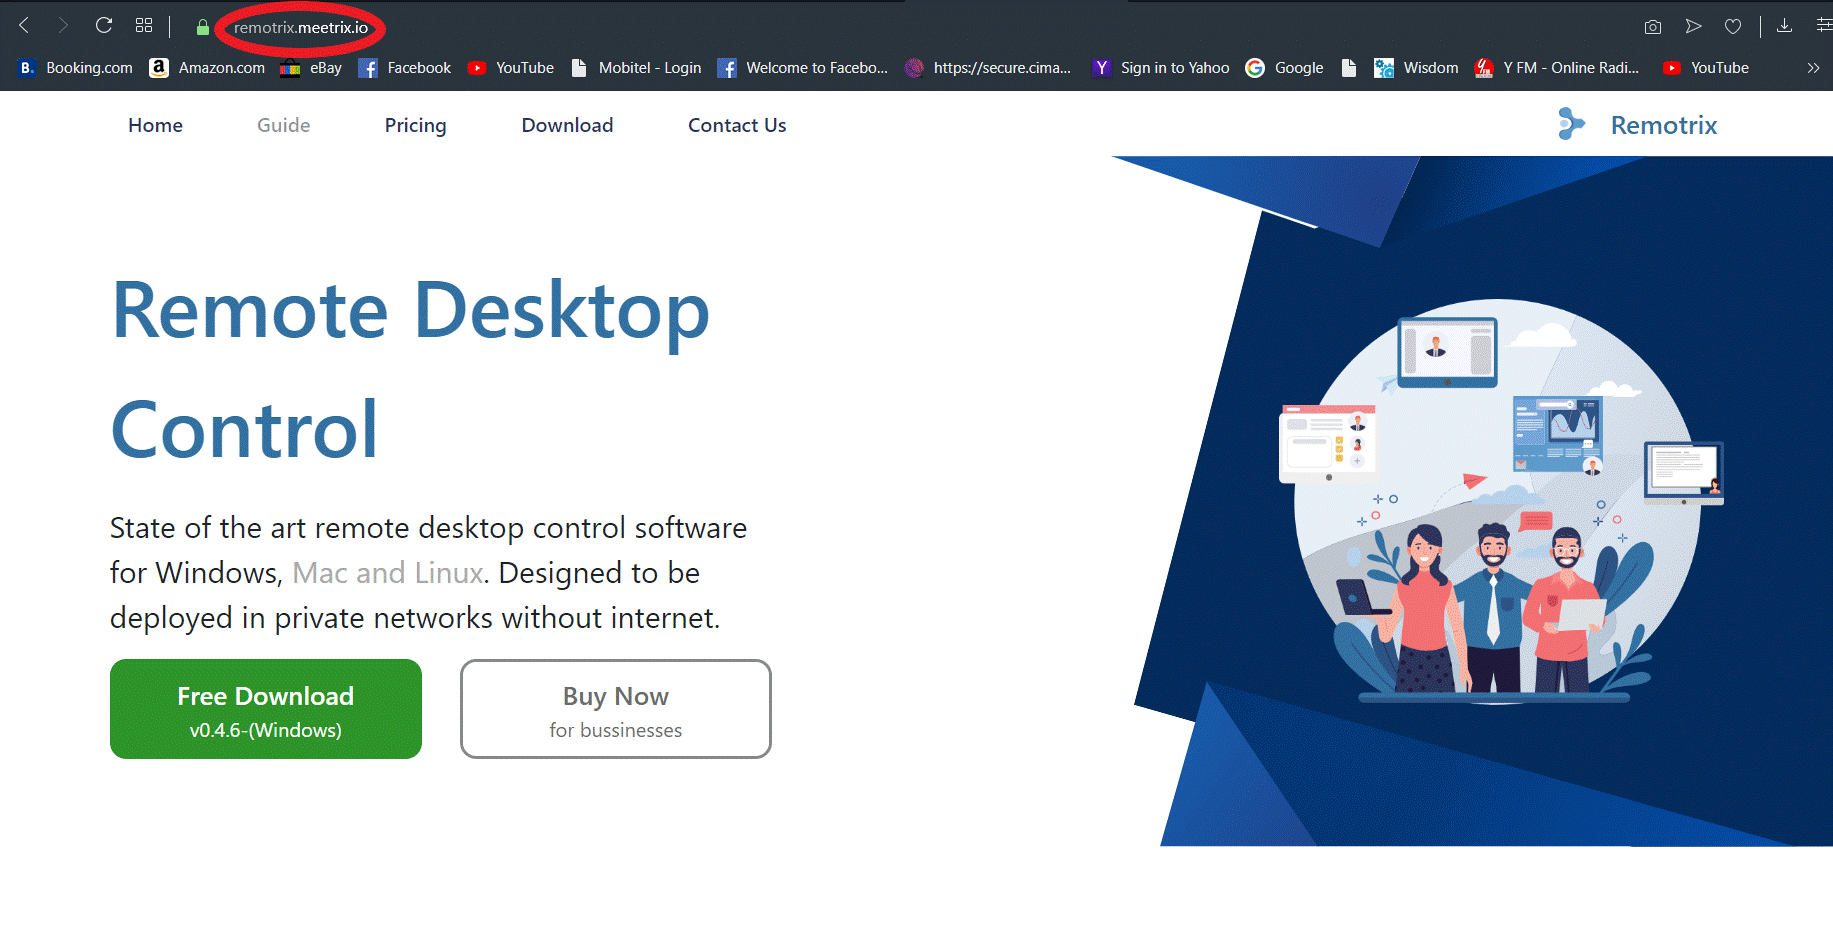 How To Share My Desktop Remotrix